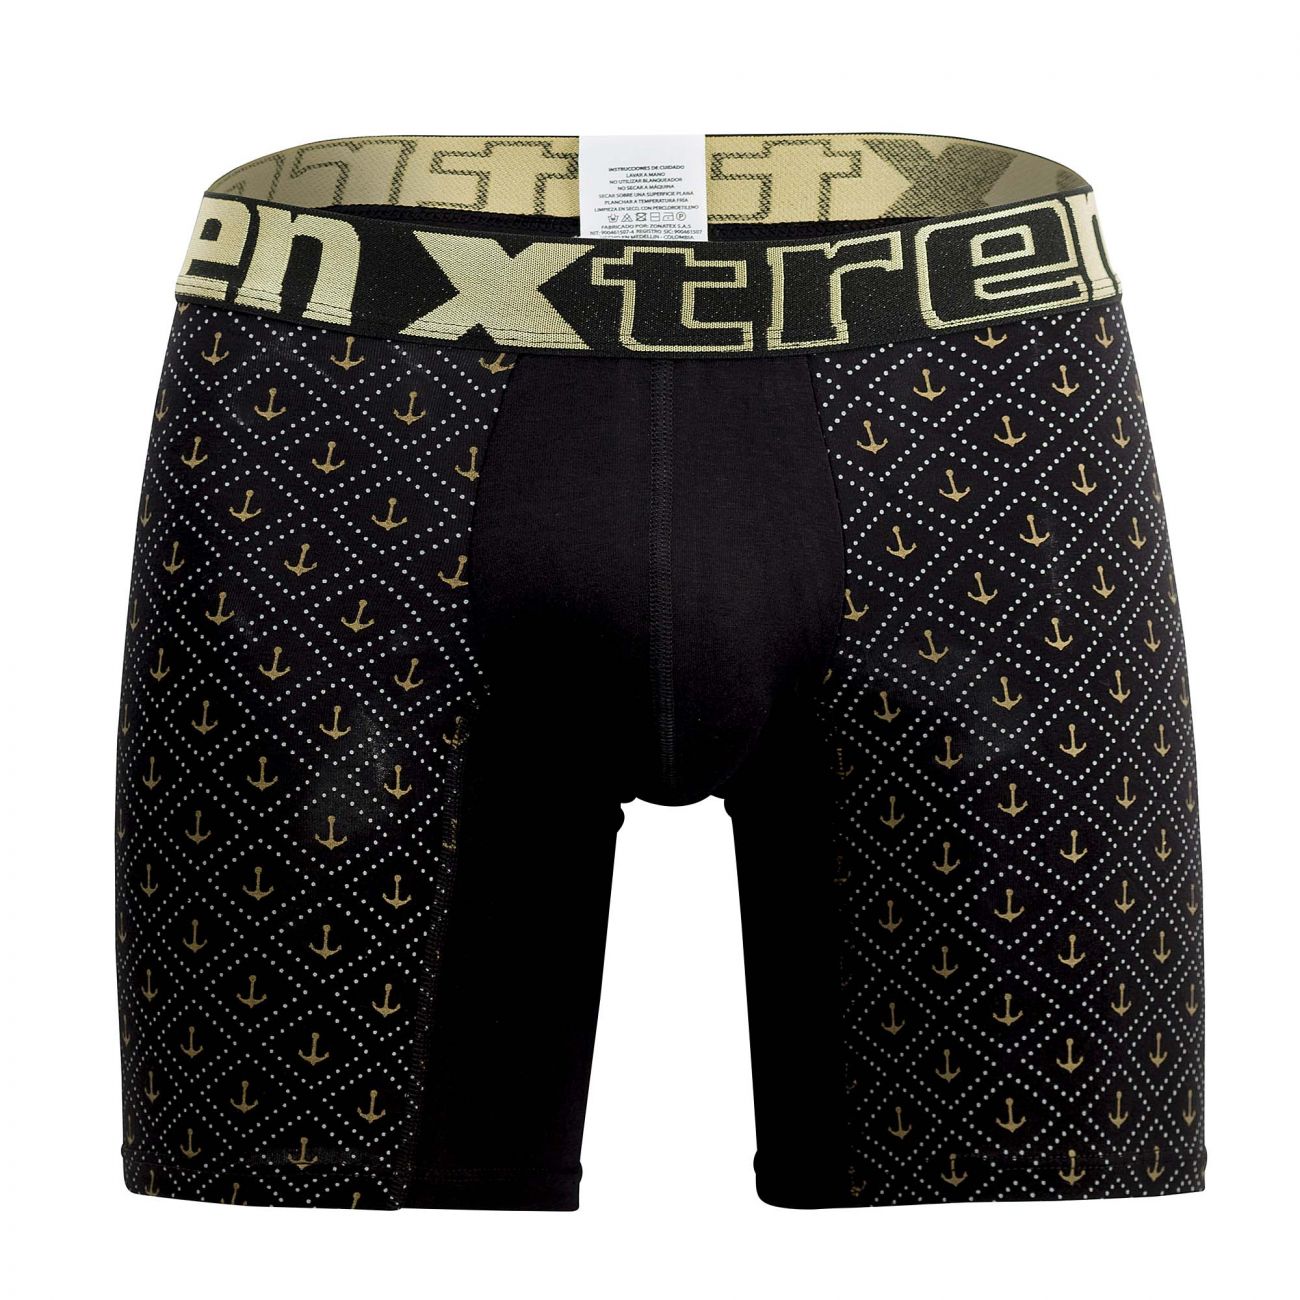 Xtremen 51461 Cotton Boxer Briefs